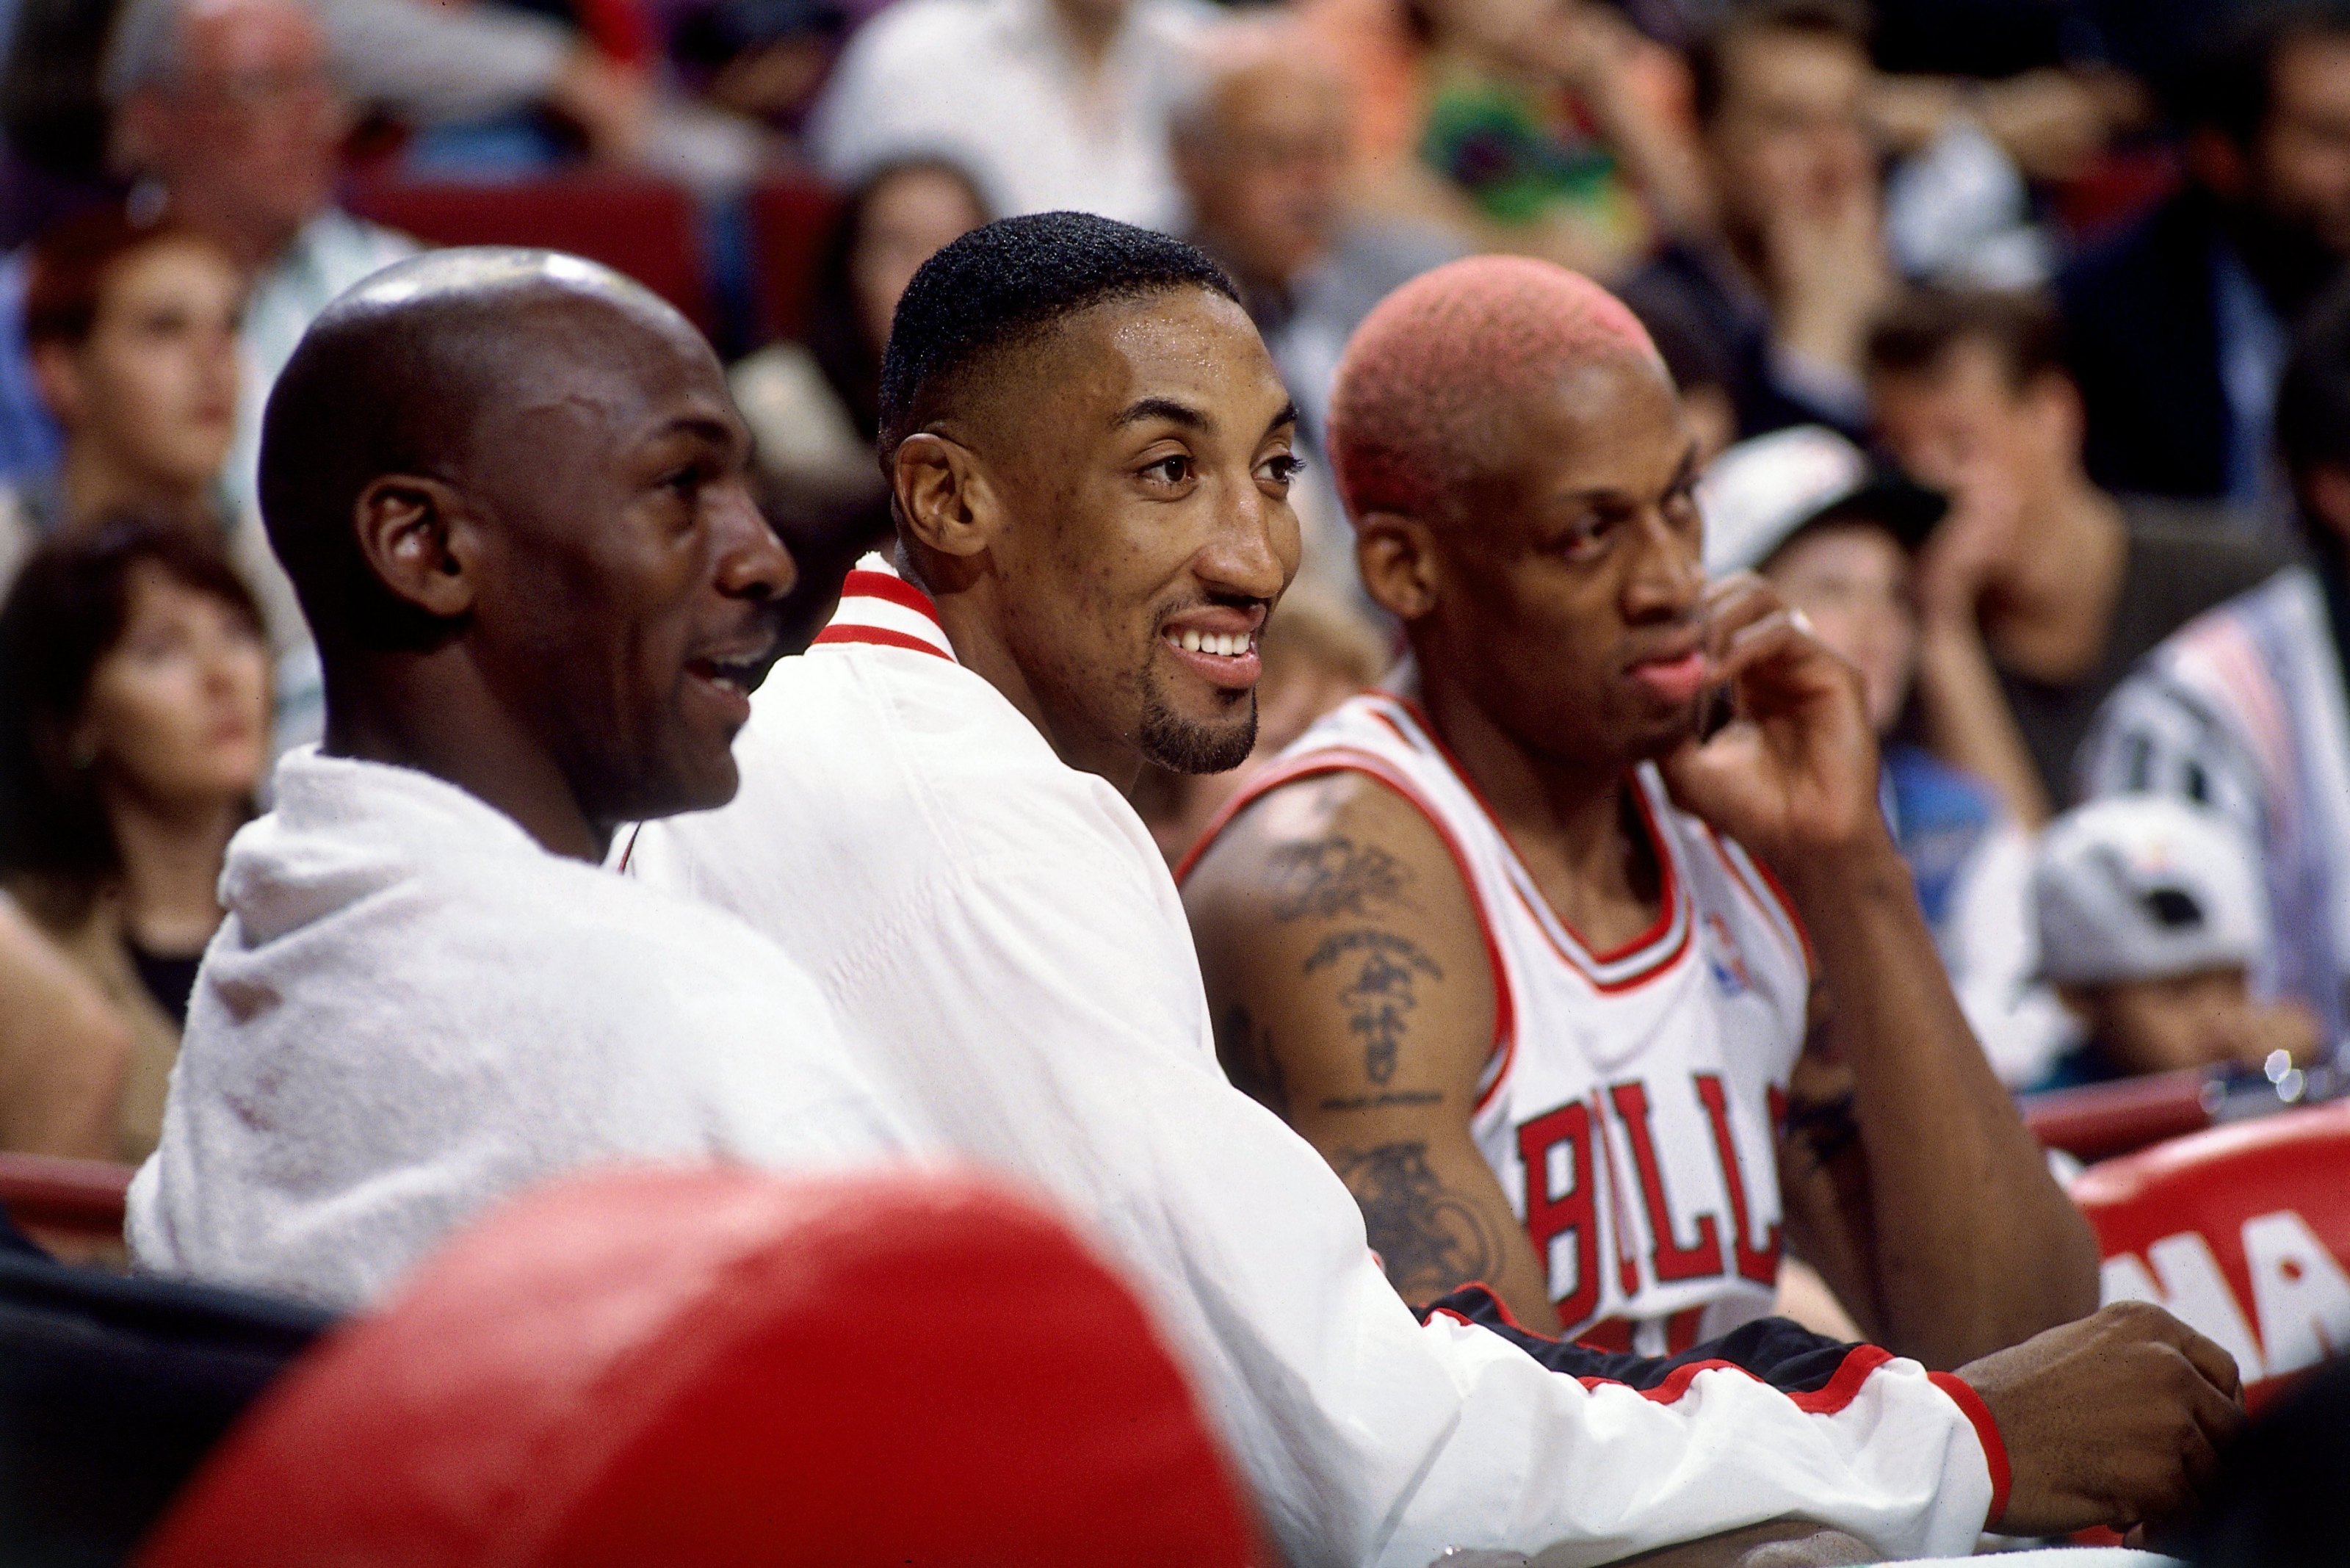 chicago Bulls champion Dennis Rodman Michael Jordan and Scottie